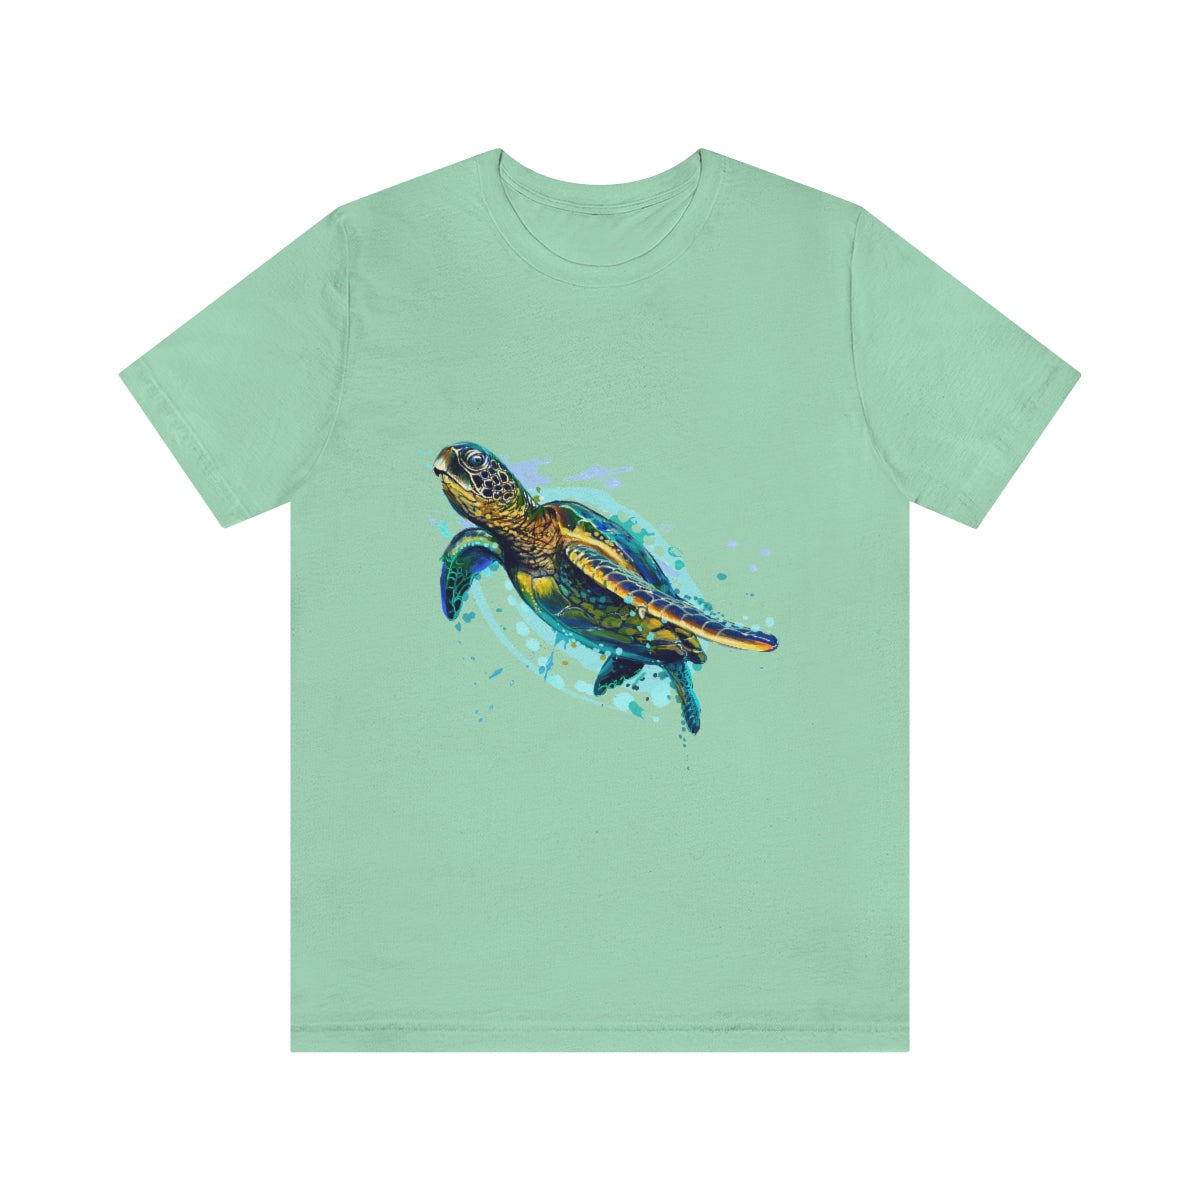 Unisex Jersey Short Sleeve Tee "Sea colorful turtle"